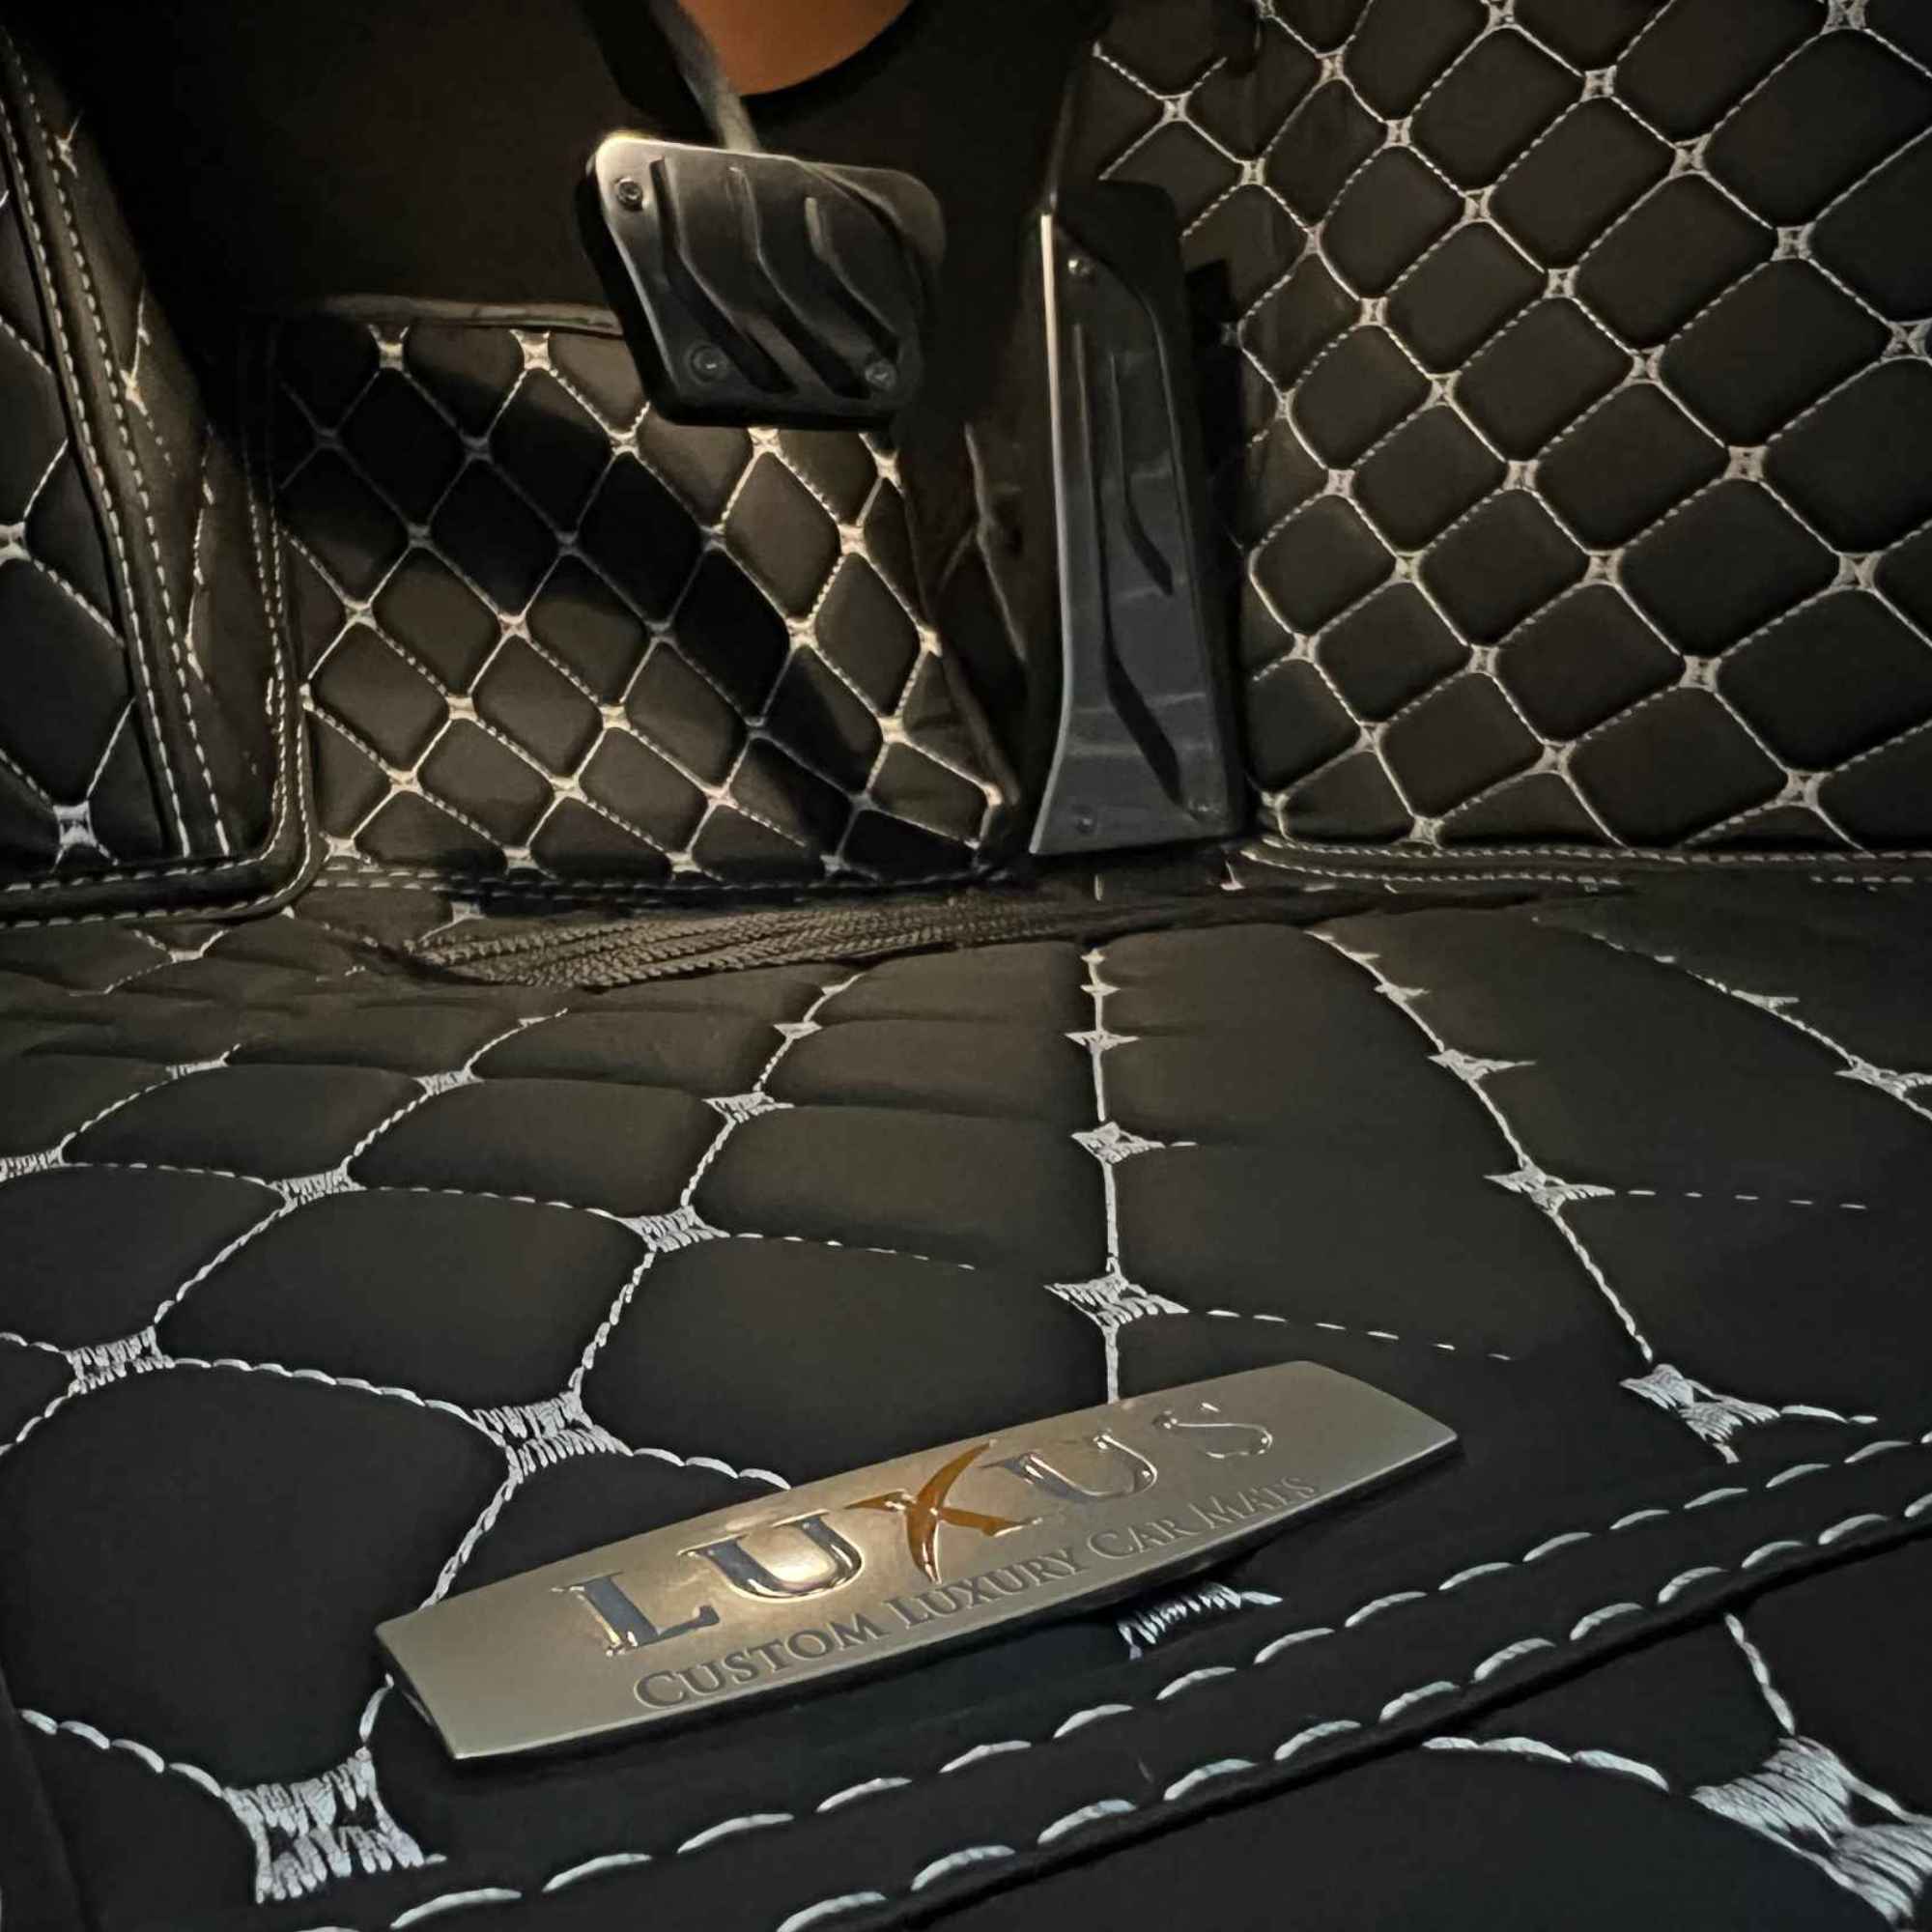 8D Car Floor Mats In Brown For All Cars Pegasus Premium Luxury Leatherite